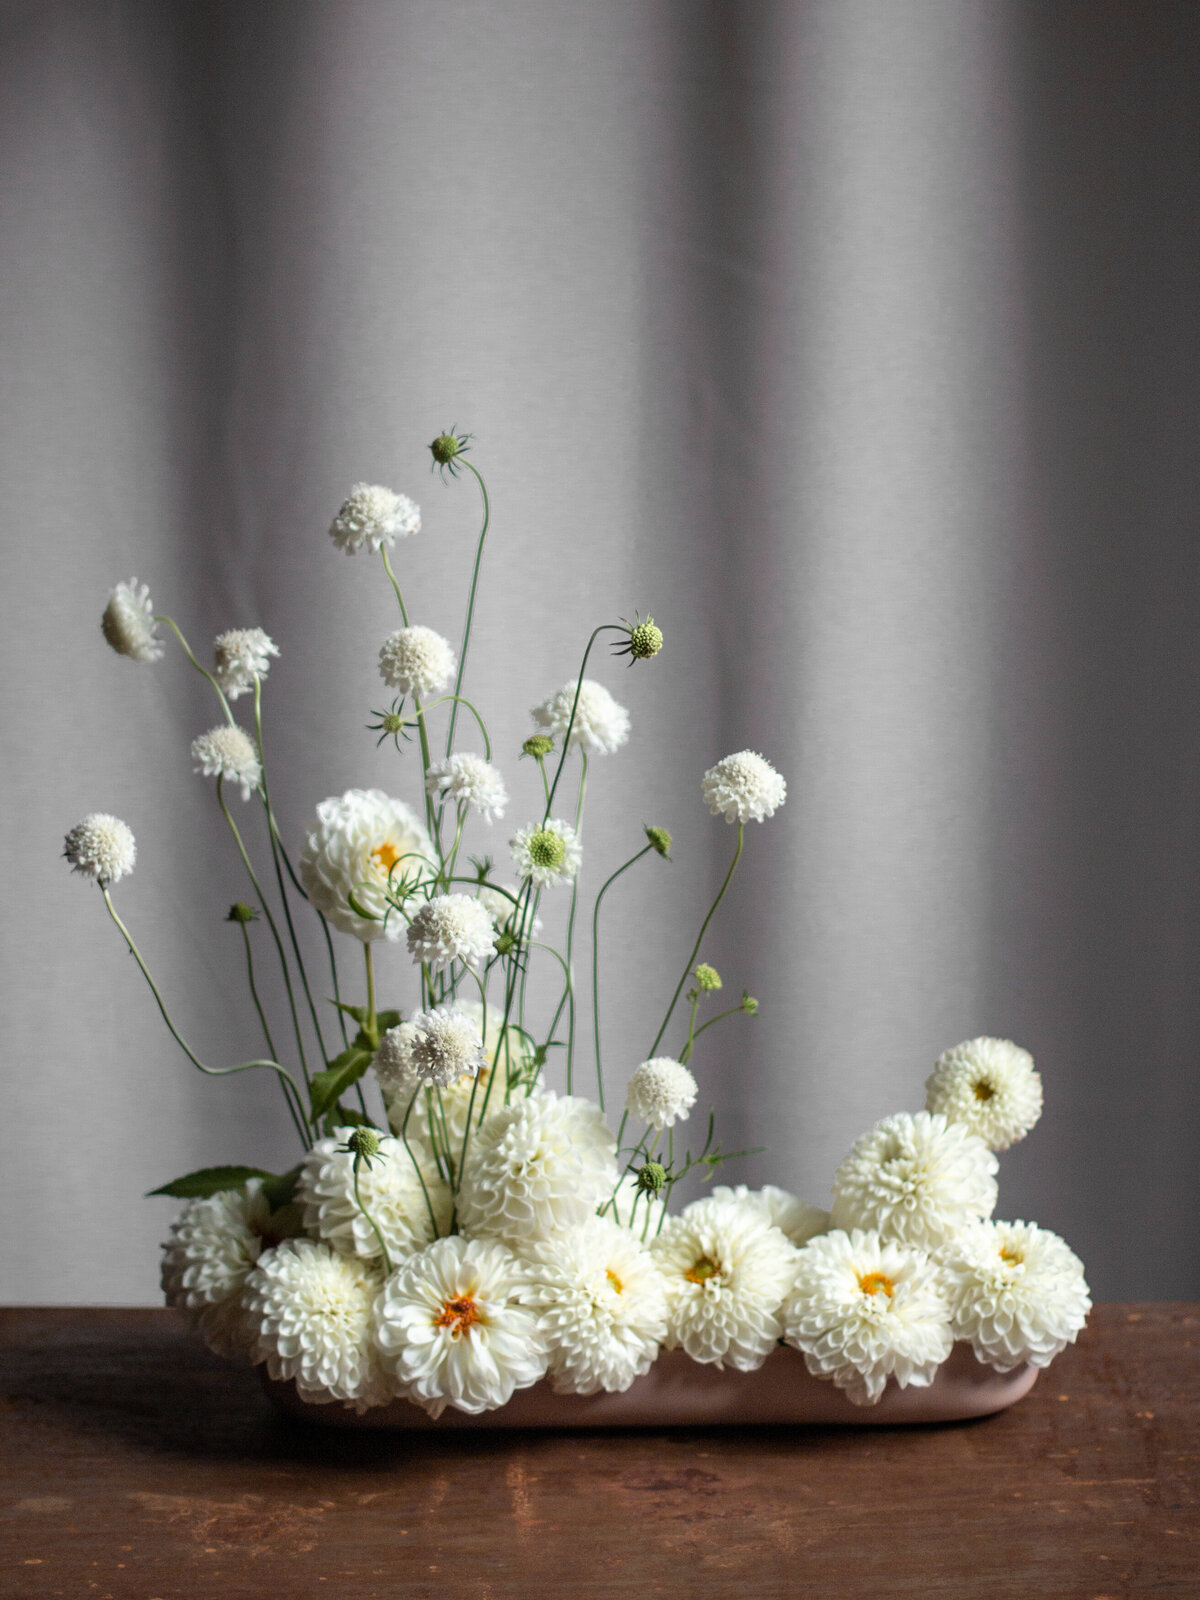 Atelier-Carmel-Wedding-Florist-GALLERY-Arrangements-42